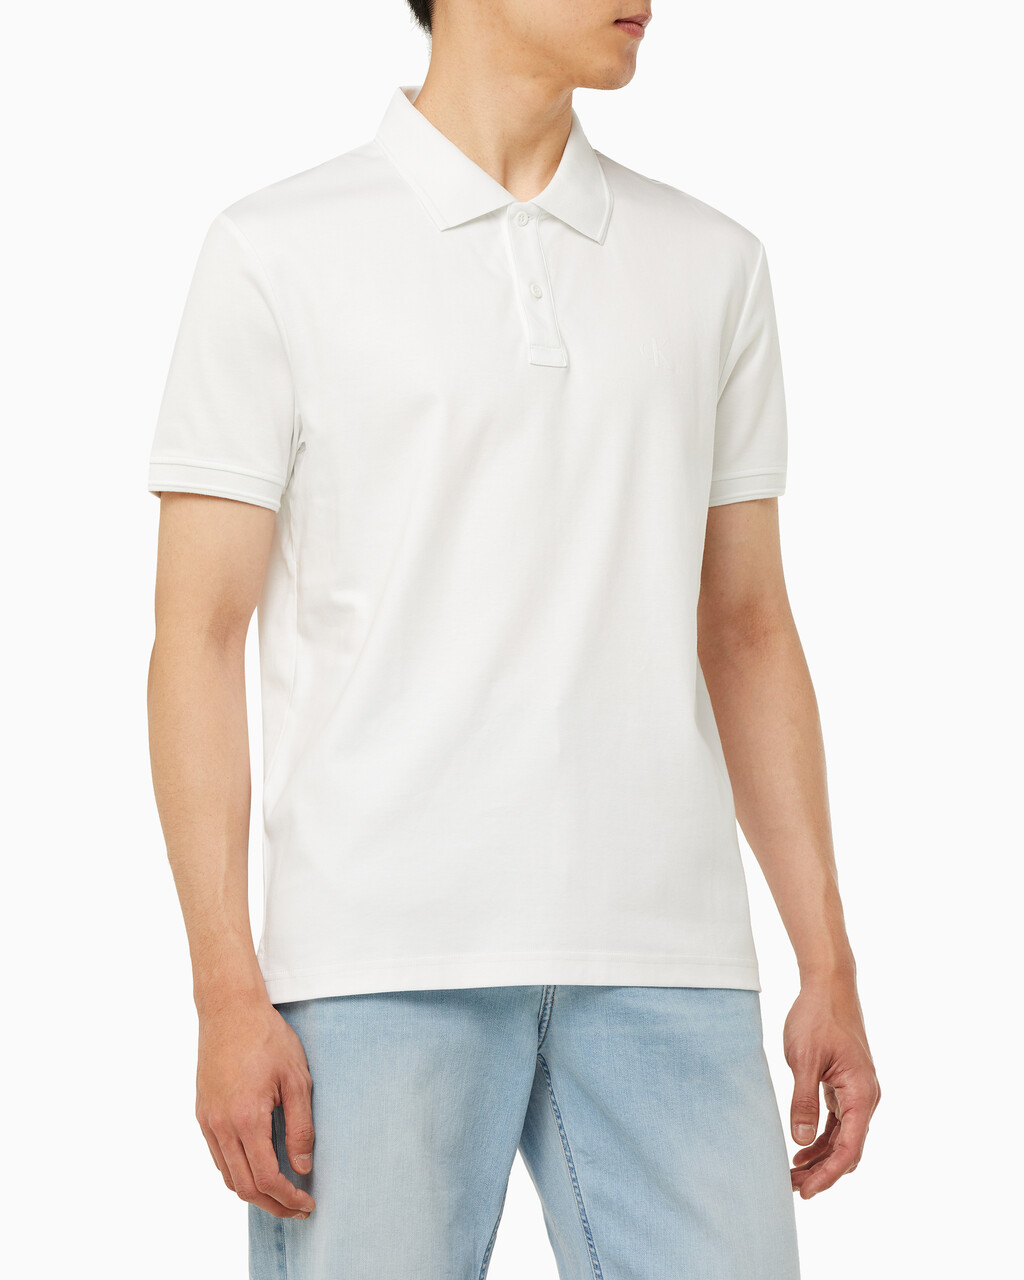 Buy 남성 톤온톤 로고 레귤러핏 폴로 반팔 티셔츠 in color BRIGHT WHITE